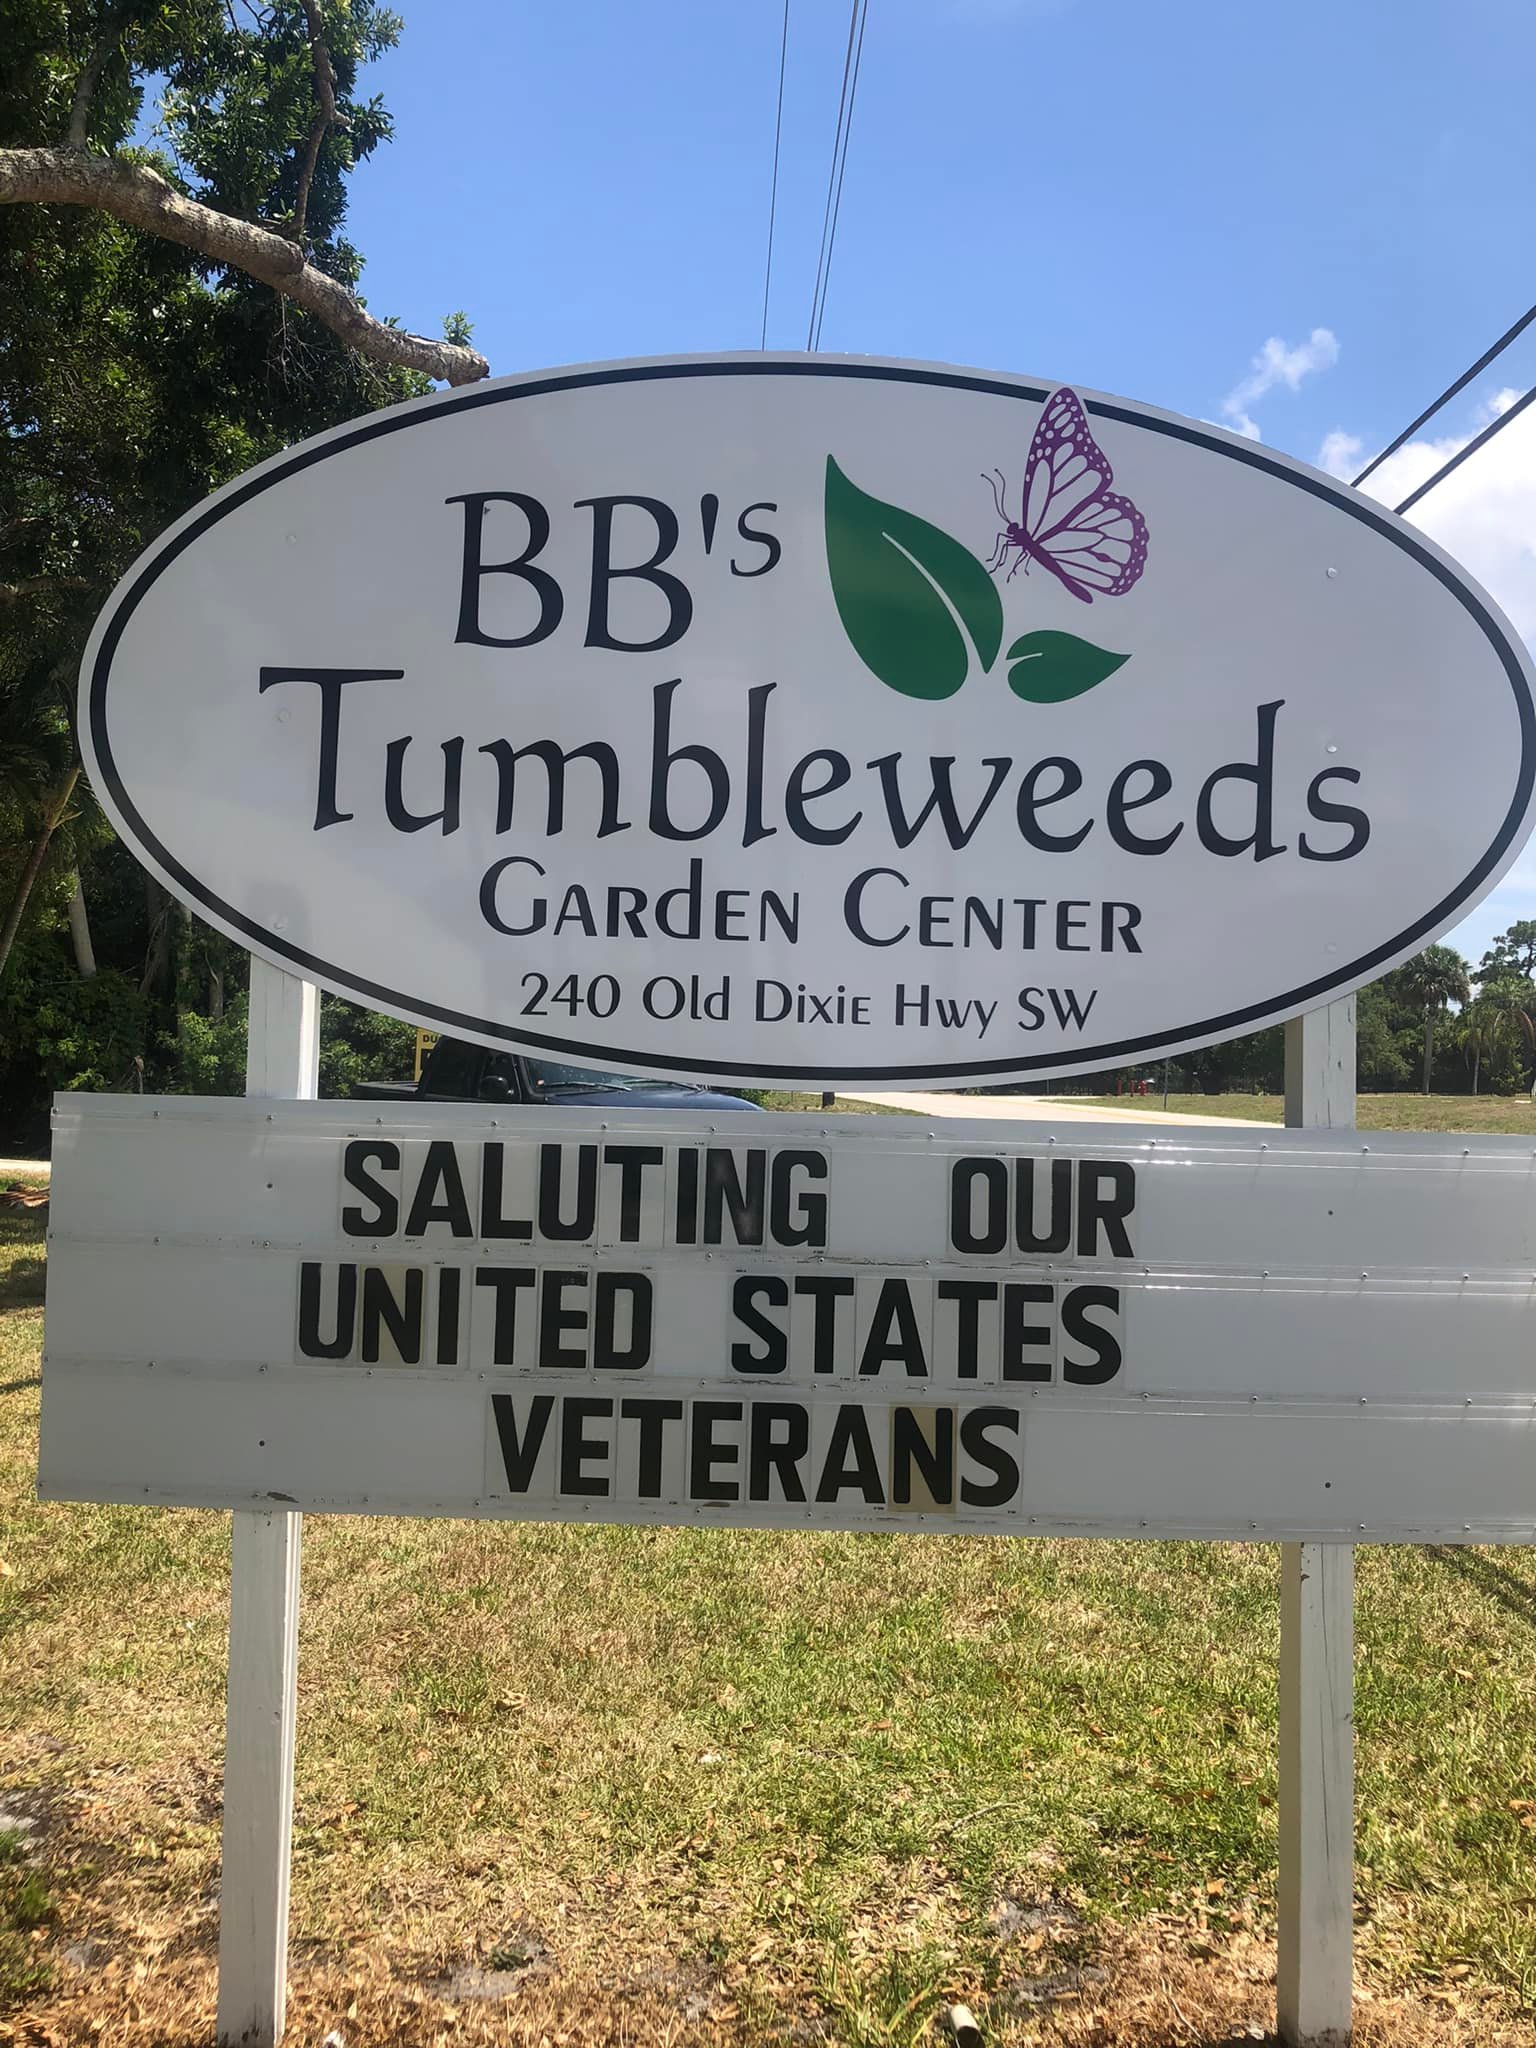 BB's Tumbleweeds Garden Center